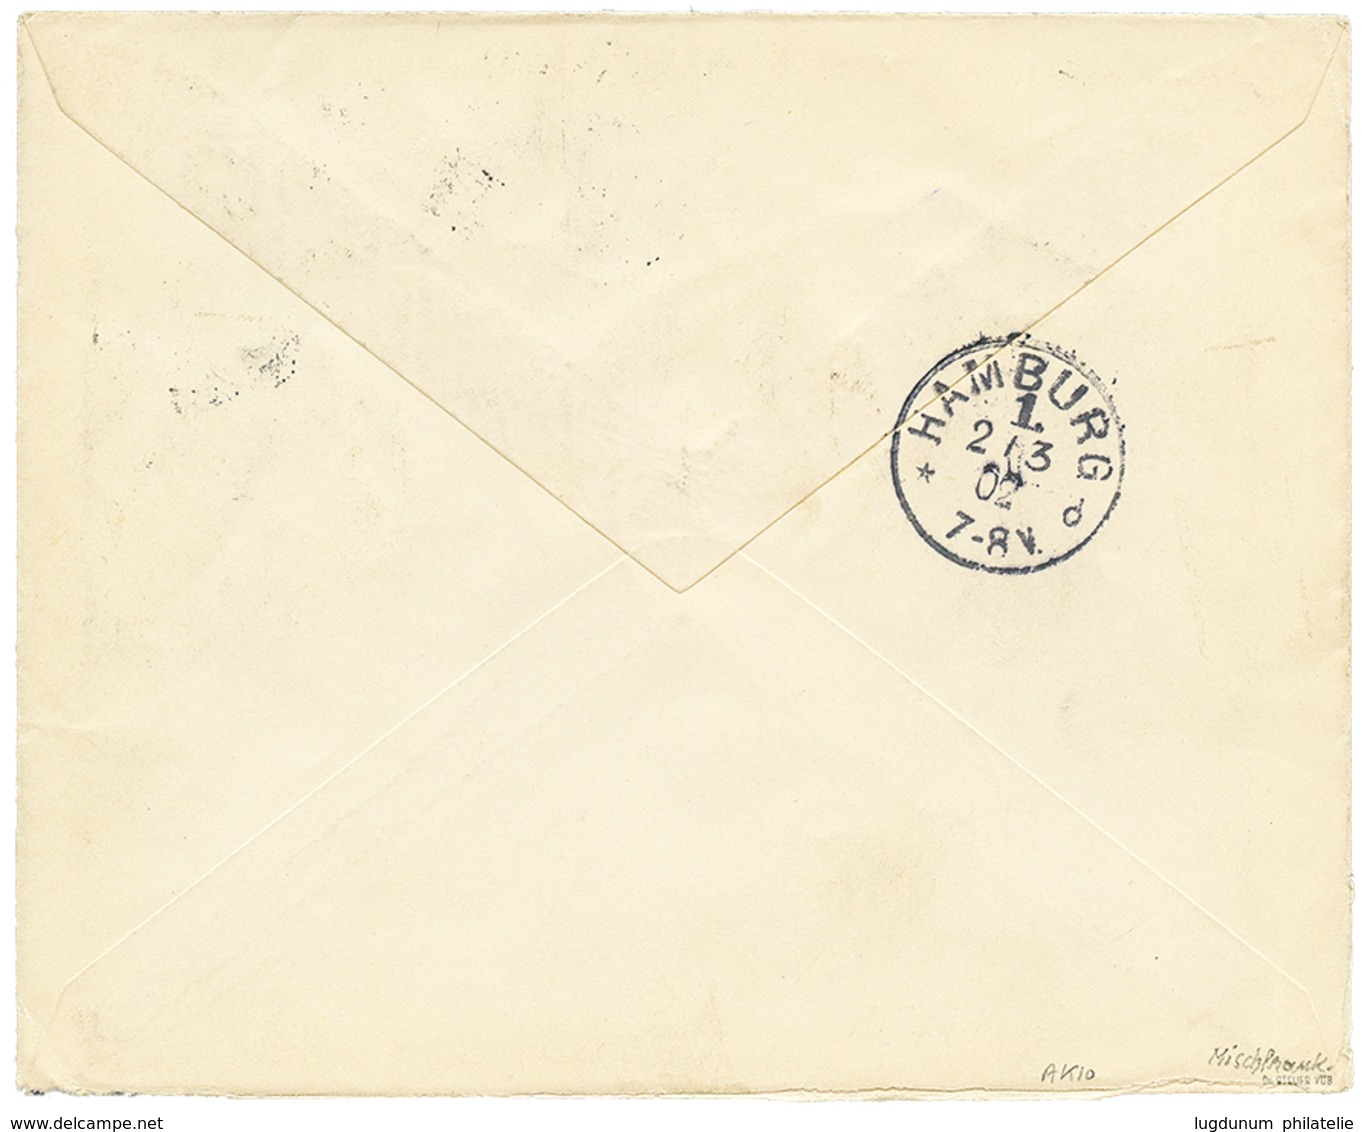 1057 1902 25pf(n°5I) + 25pf(n°19) + 5pf(n°2II) + 5pf(n°16) Canc. SHANGHAI On REGISTERED Envelope To HAMBURG. Rare Mixed  - China (offices)